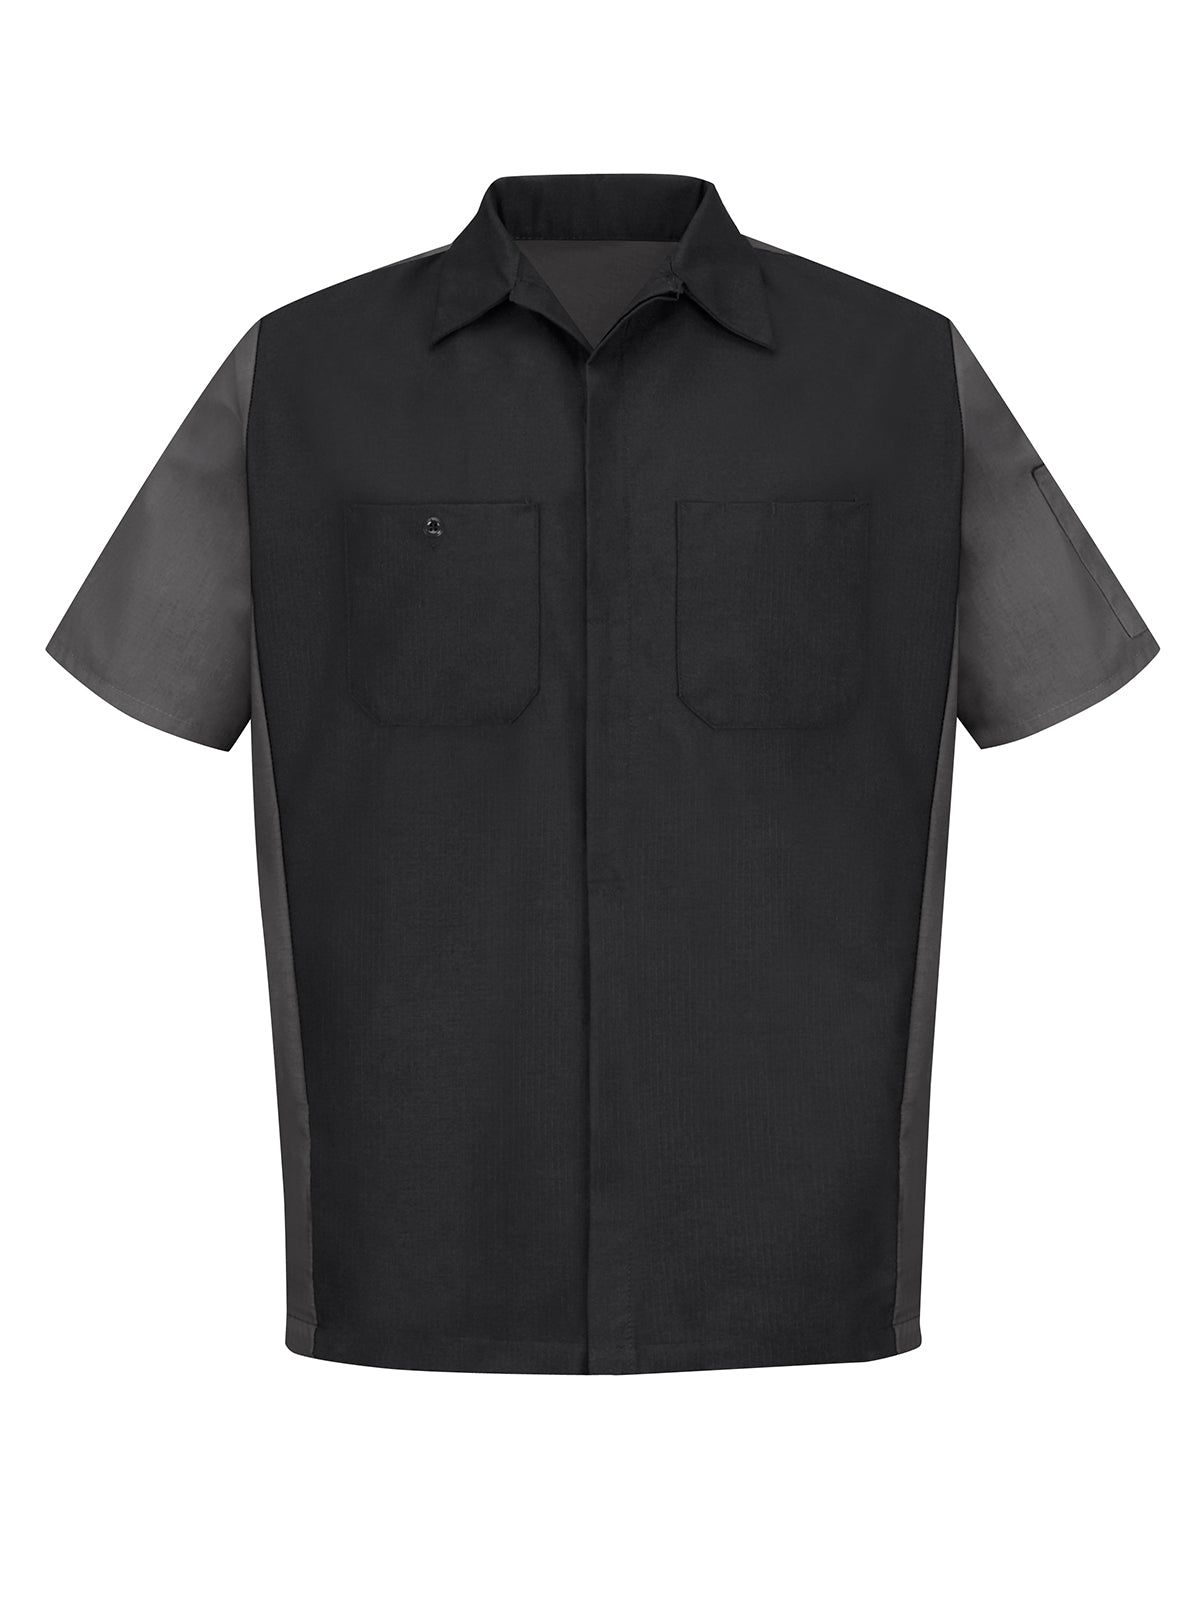 Men's Short Sleeve Two-Tone Crew Shirt - SY20 - Black/Charcoal